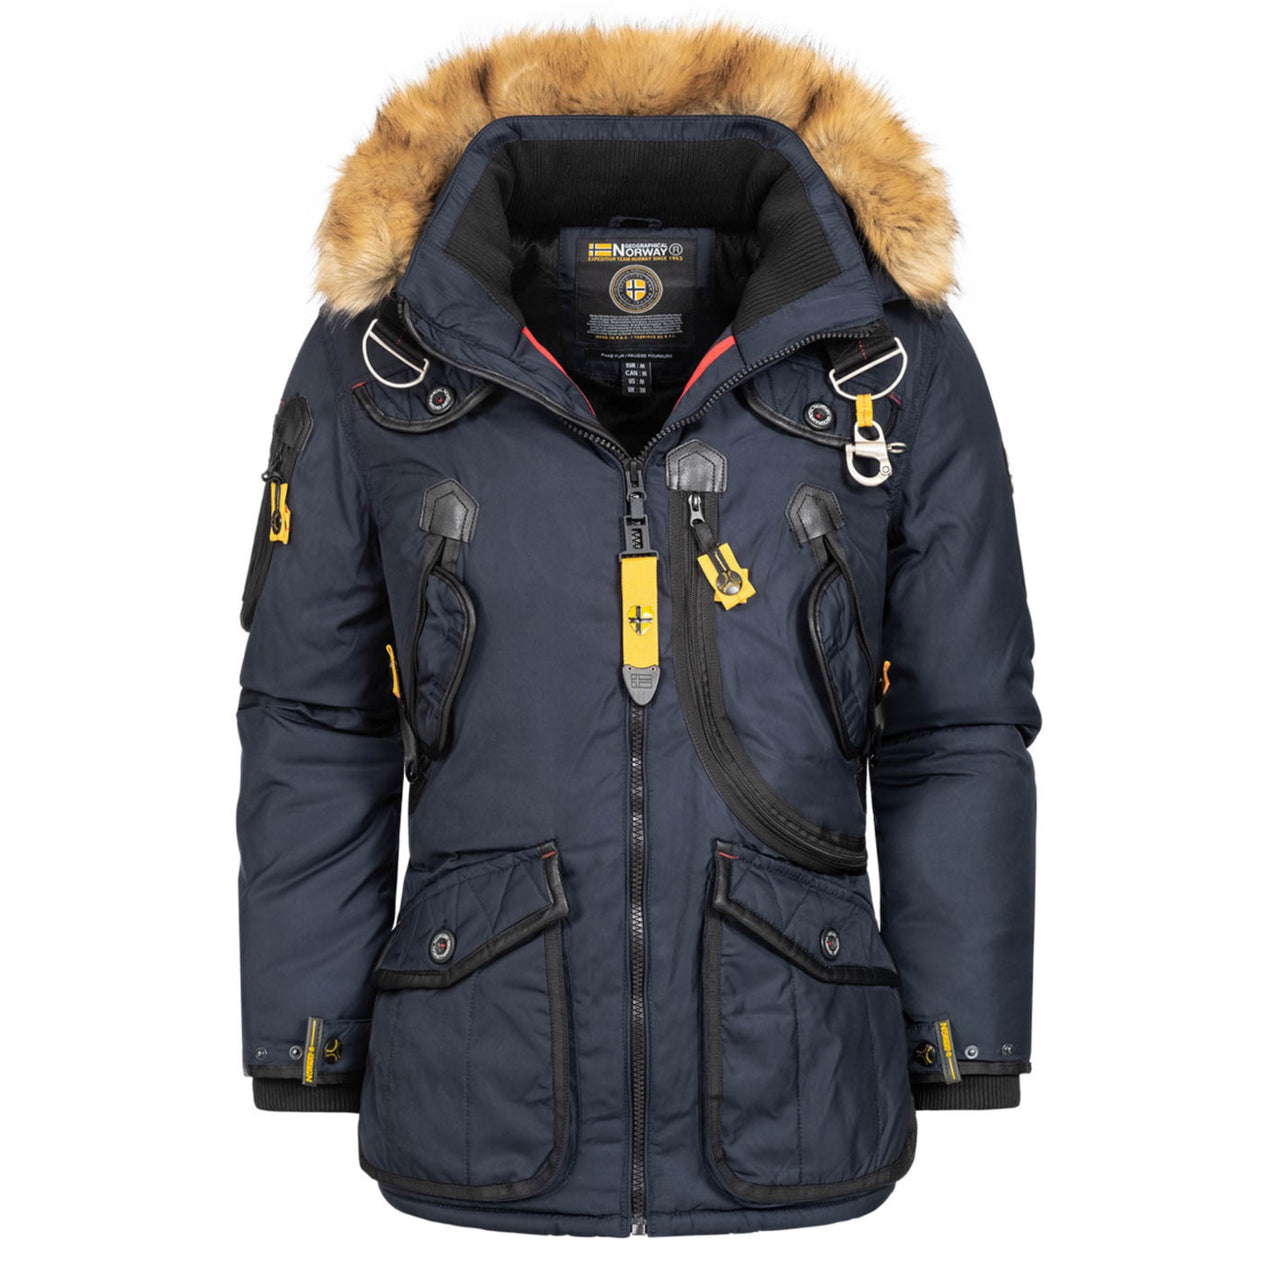 Geographical Norway Men's Parka Agaros - Versatile jacket with adjustable  hood